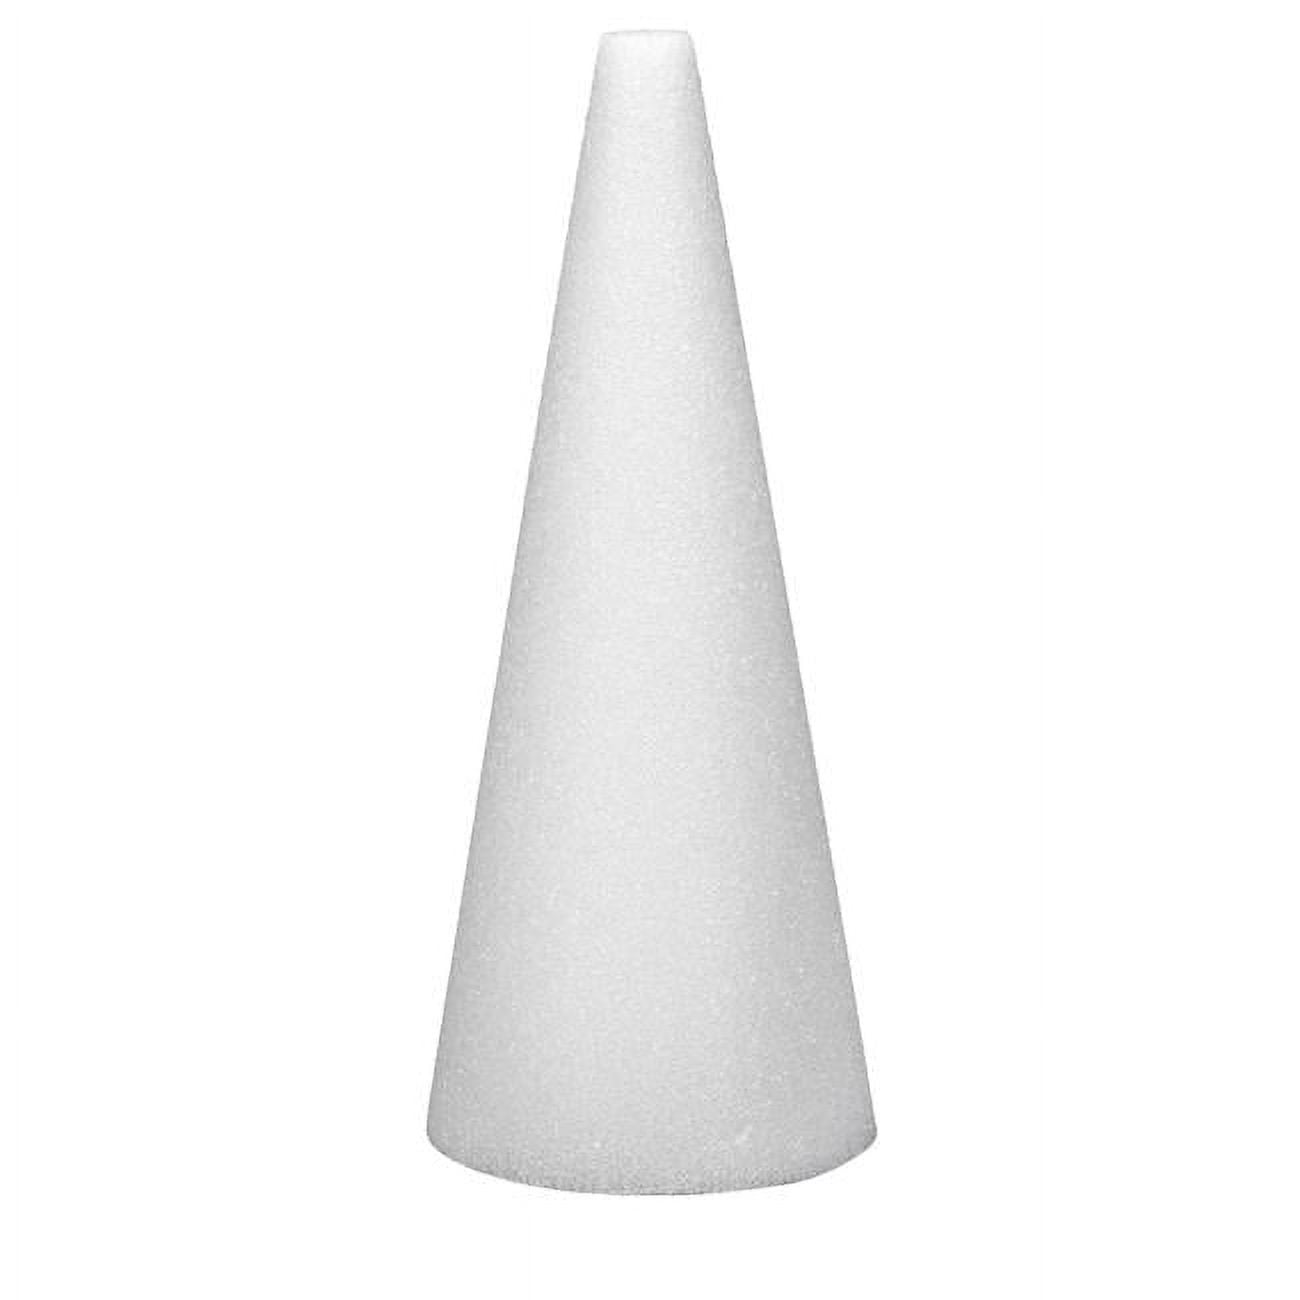 Floracraft Styrofoam Cone, 6 x 3 Inches, White